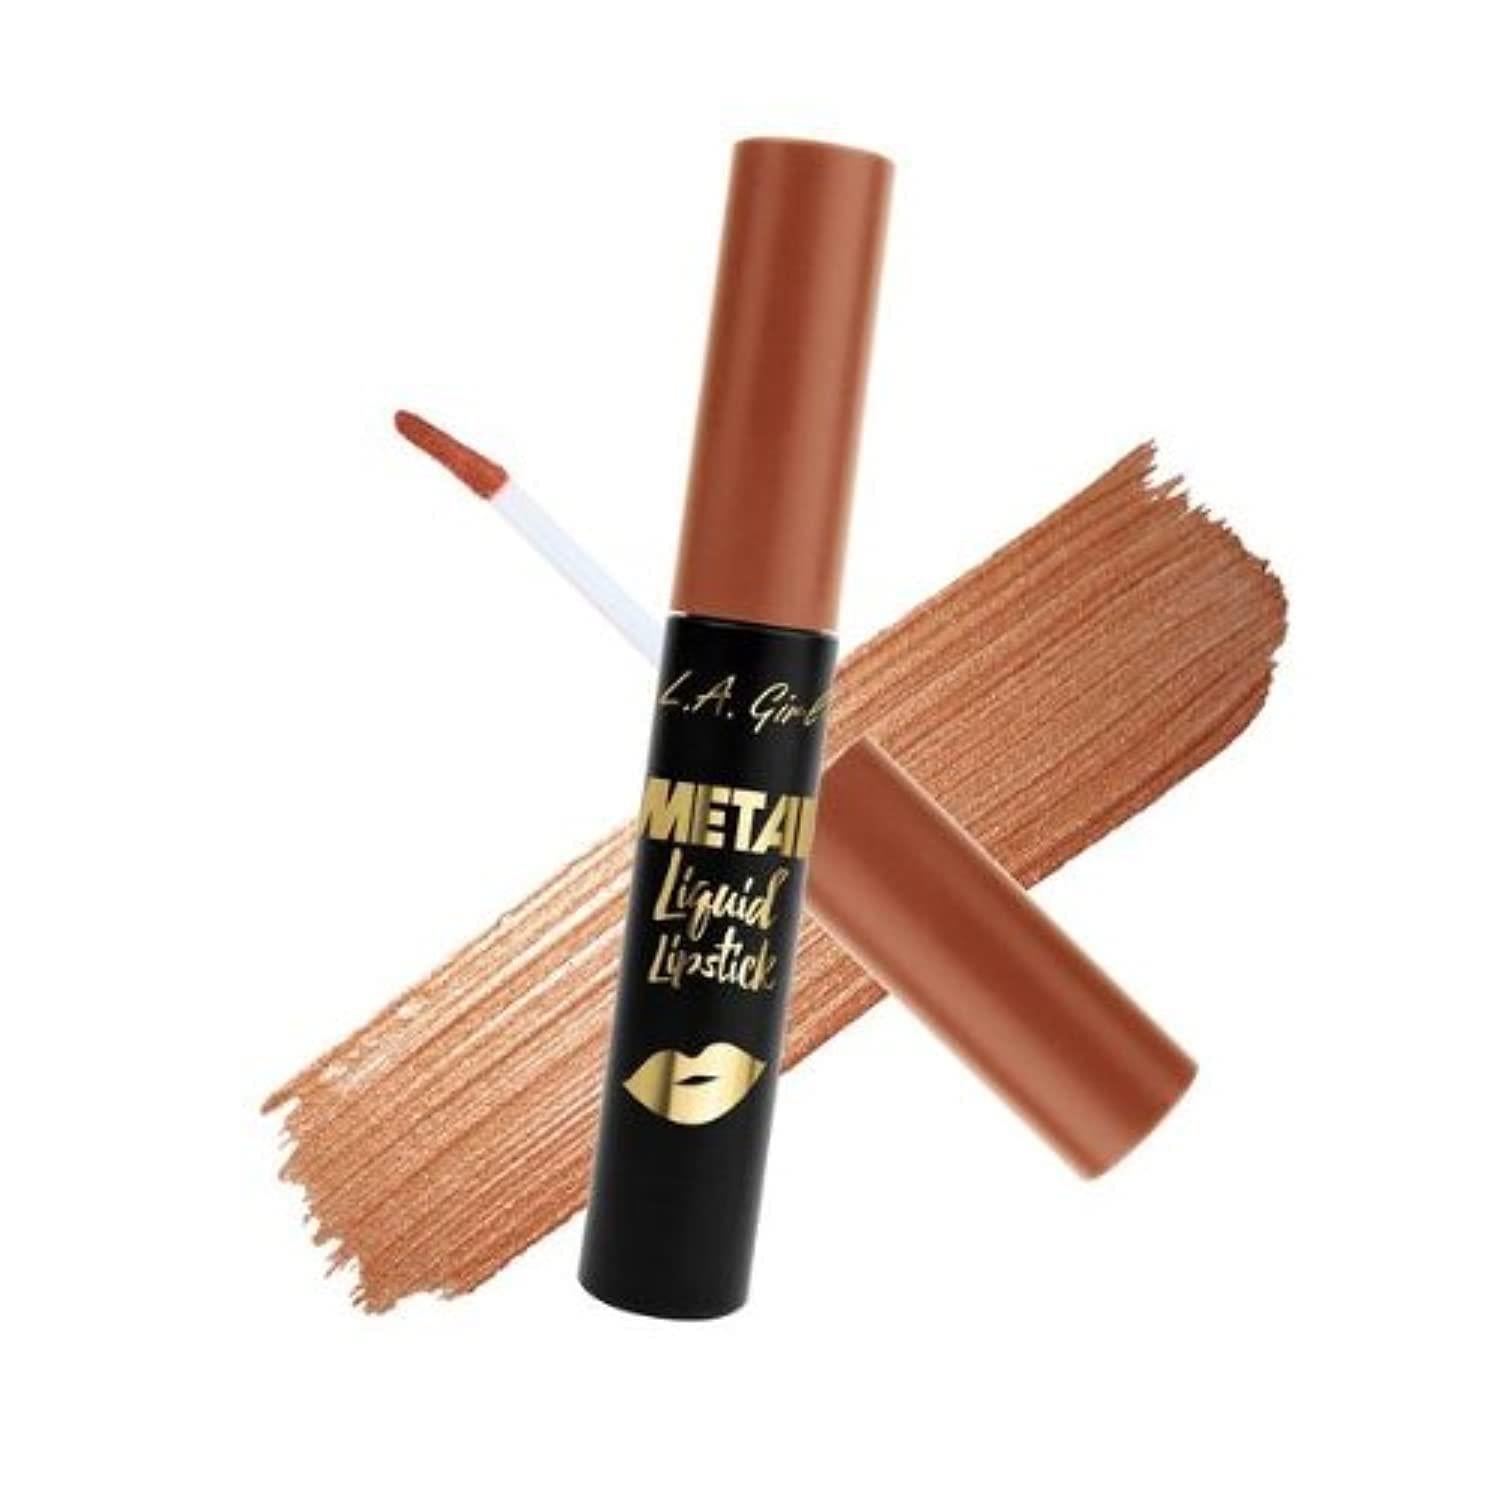 L.A Girl Metal Liquid Lipstick (Brown)